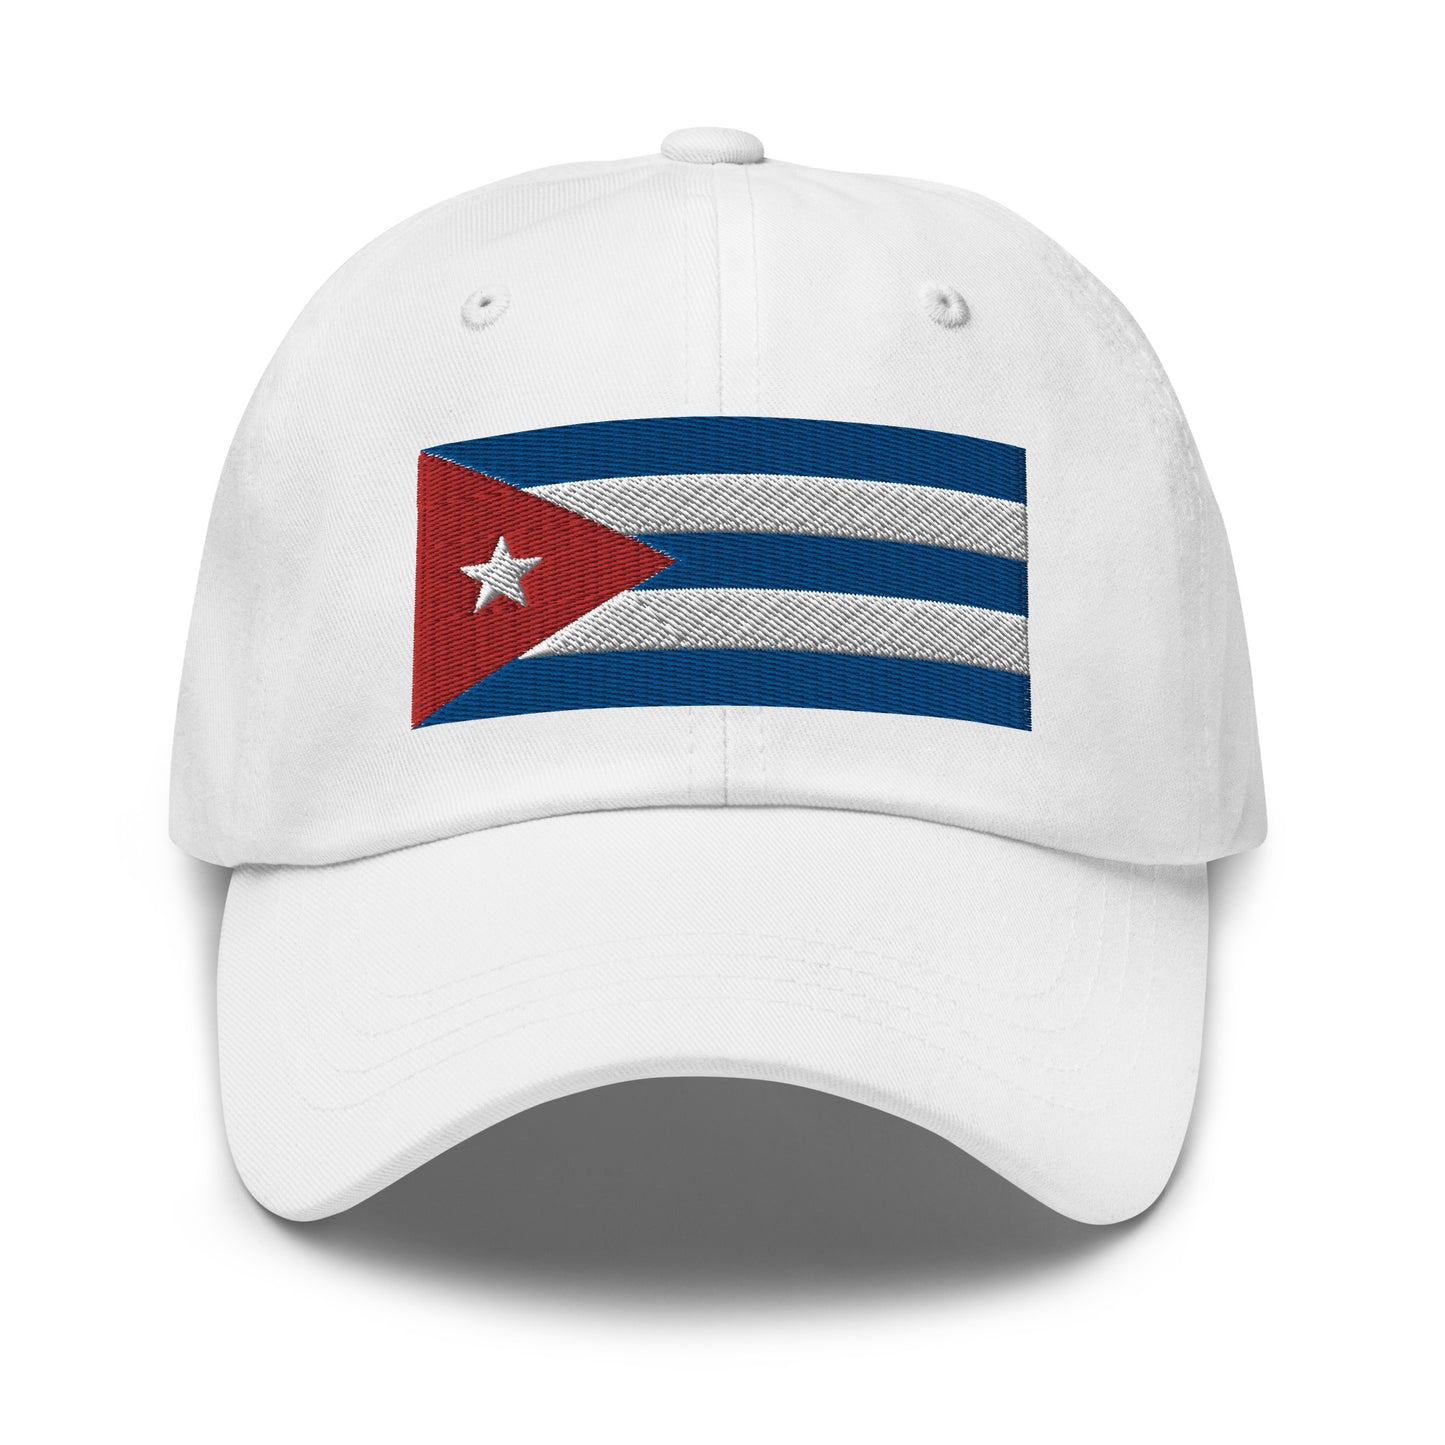 Cuban Flag Dad Hat - Adjustable Closure: Comfortable dad hat with an adjustable closure for a perfect fit. White color dad hat.